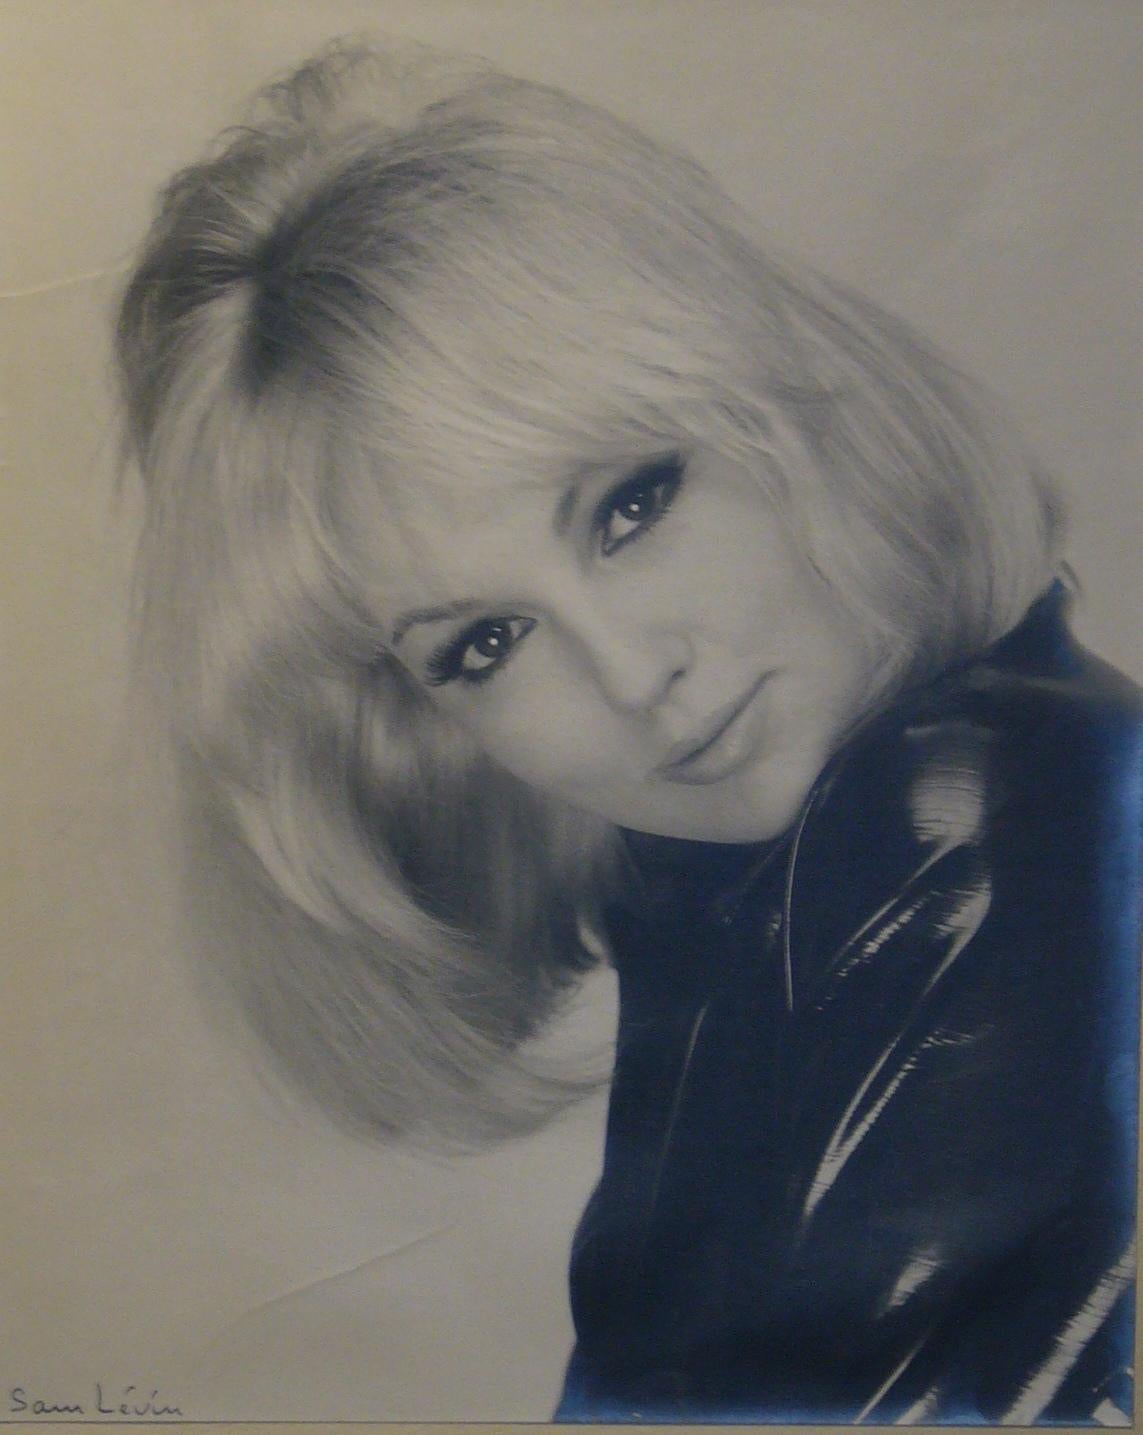 Sam Levin Portrait Print - Mylene Demongeot - signed photograph, 50x40 cm.